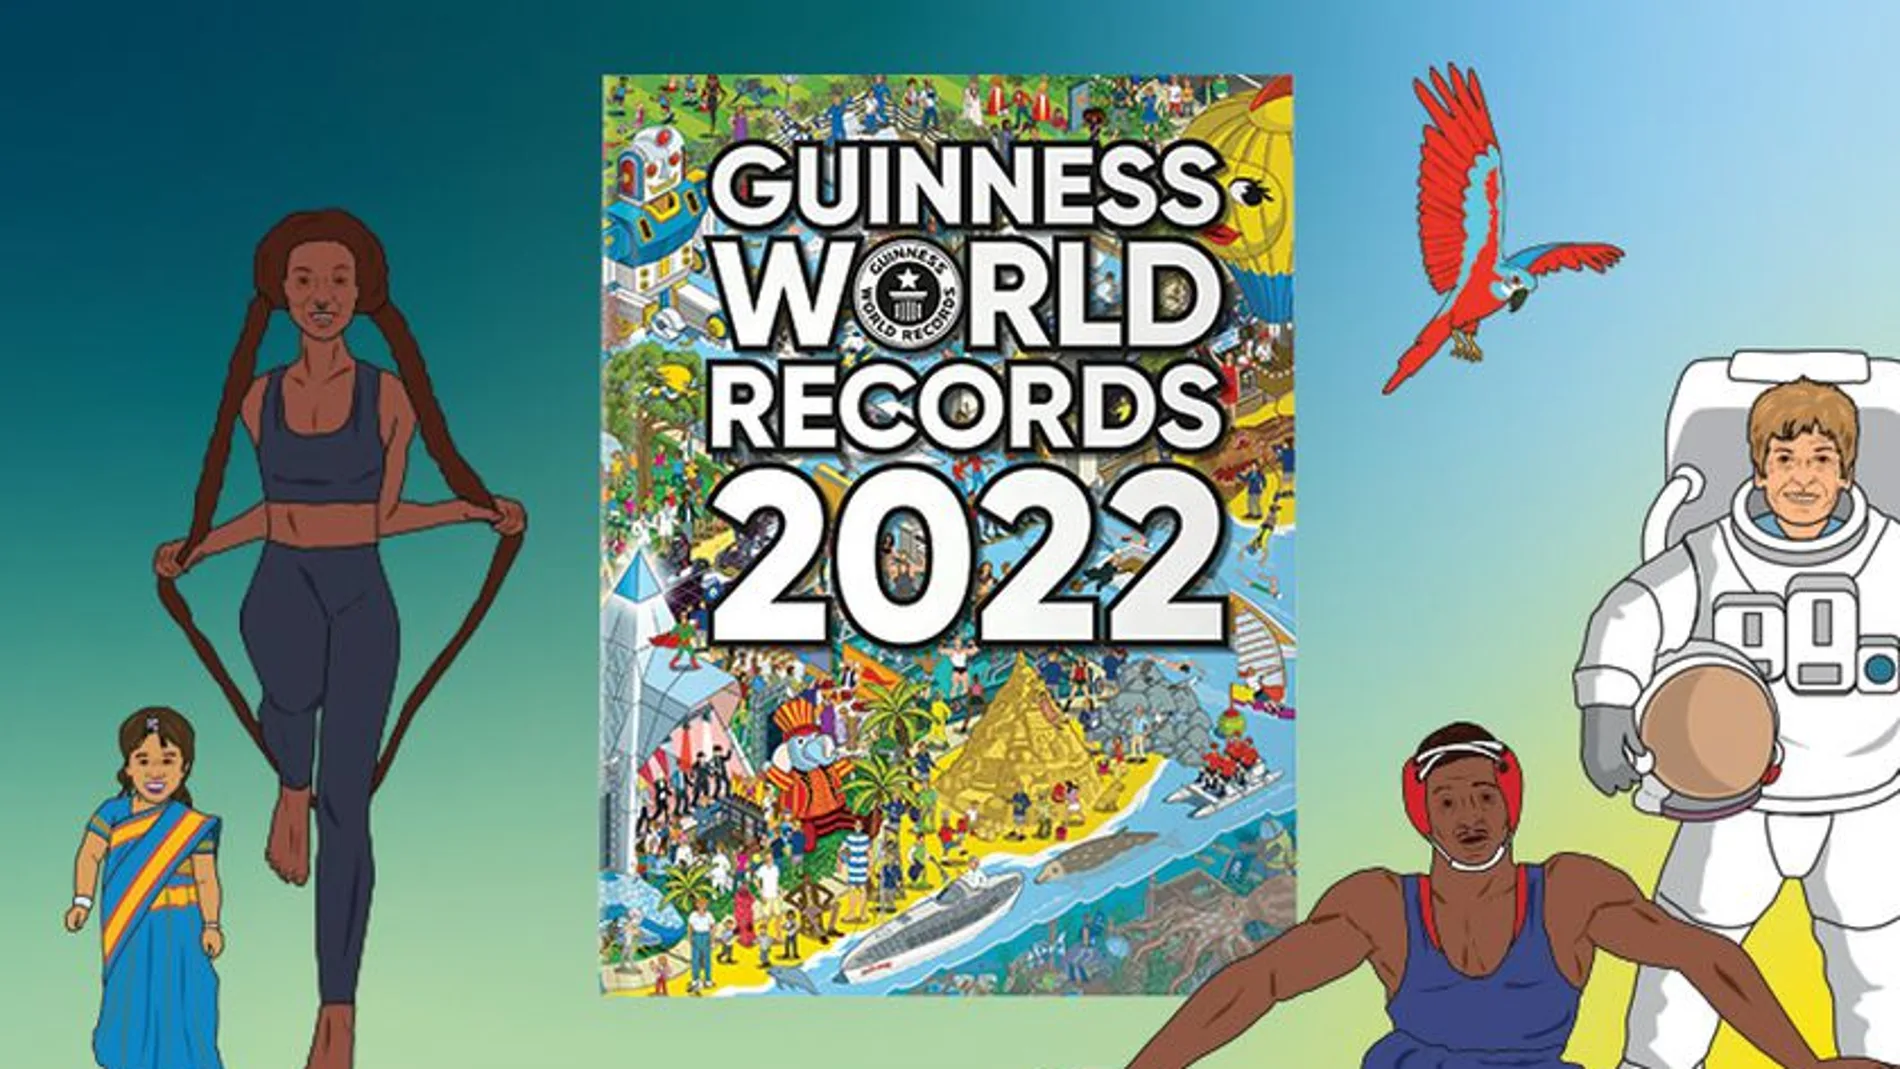 Guinness Records World 2022